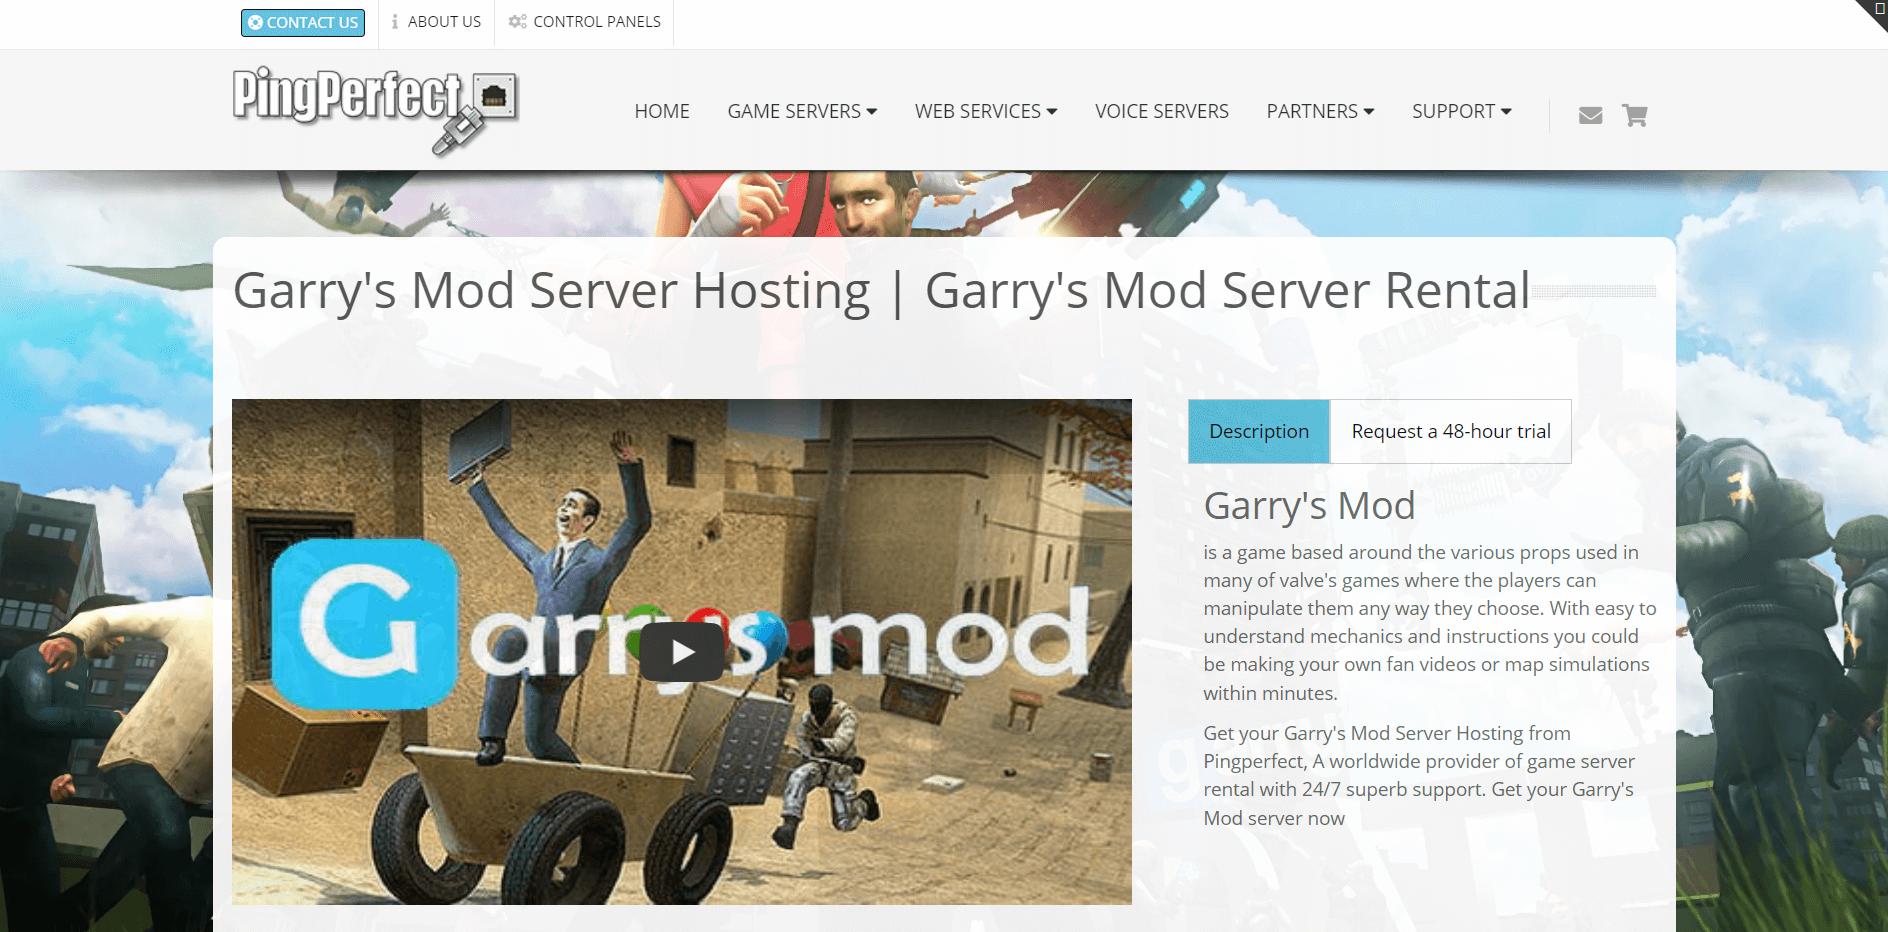 PingPerfect server hosting for Garry’s Mod